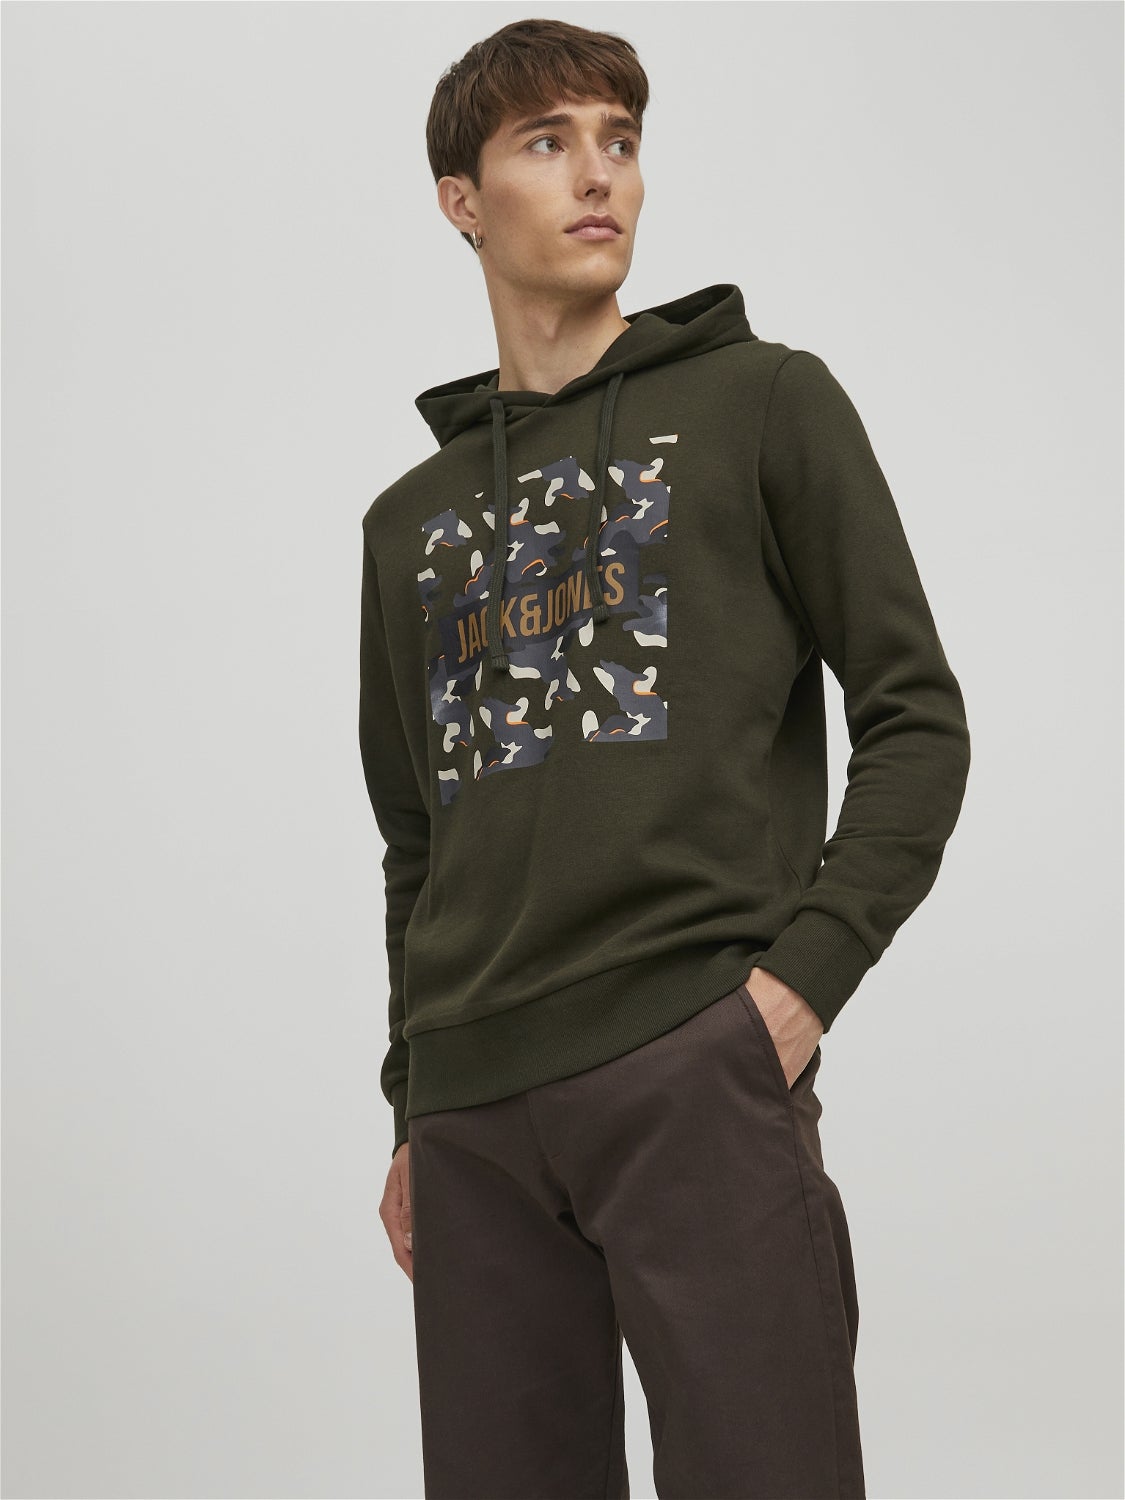 Jack & Jones sweatshirt HERREN Pullovers & Sweatshirts Hoodie Blau/Dunkelblau M Rabatt 58 % 